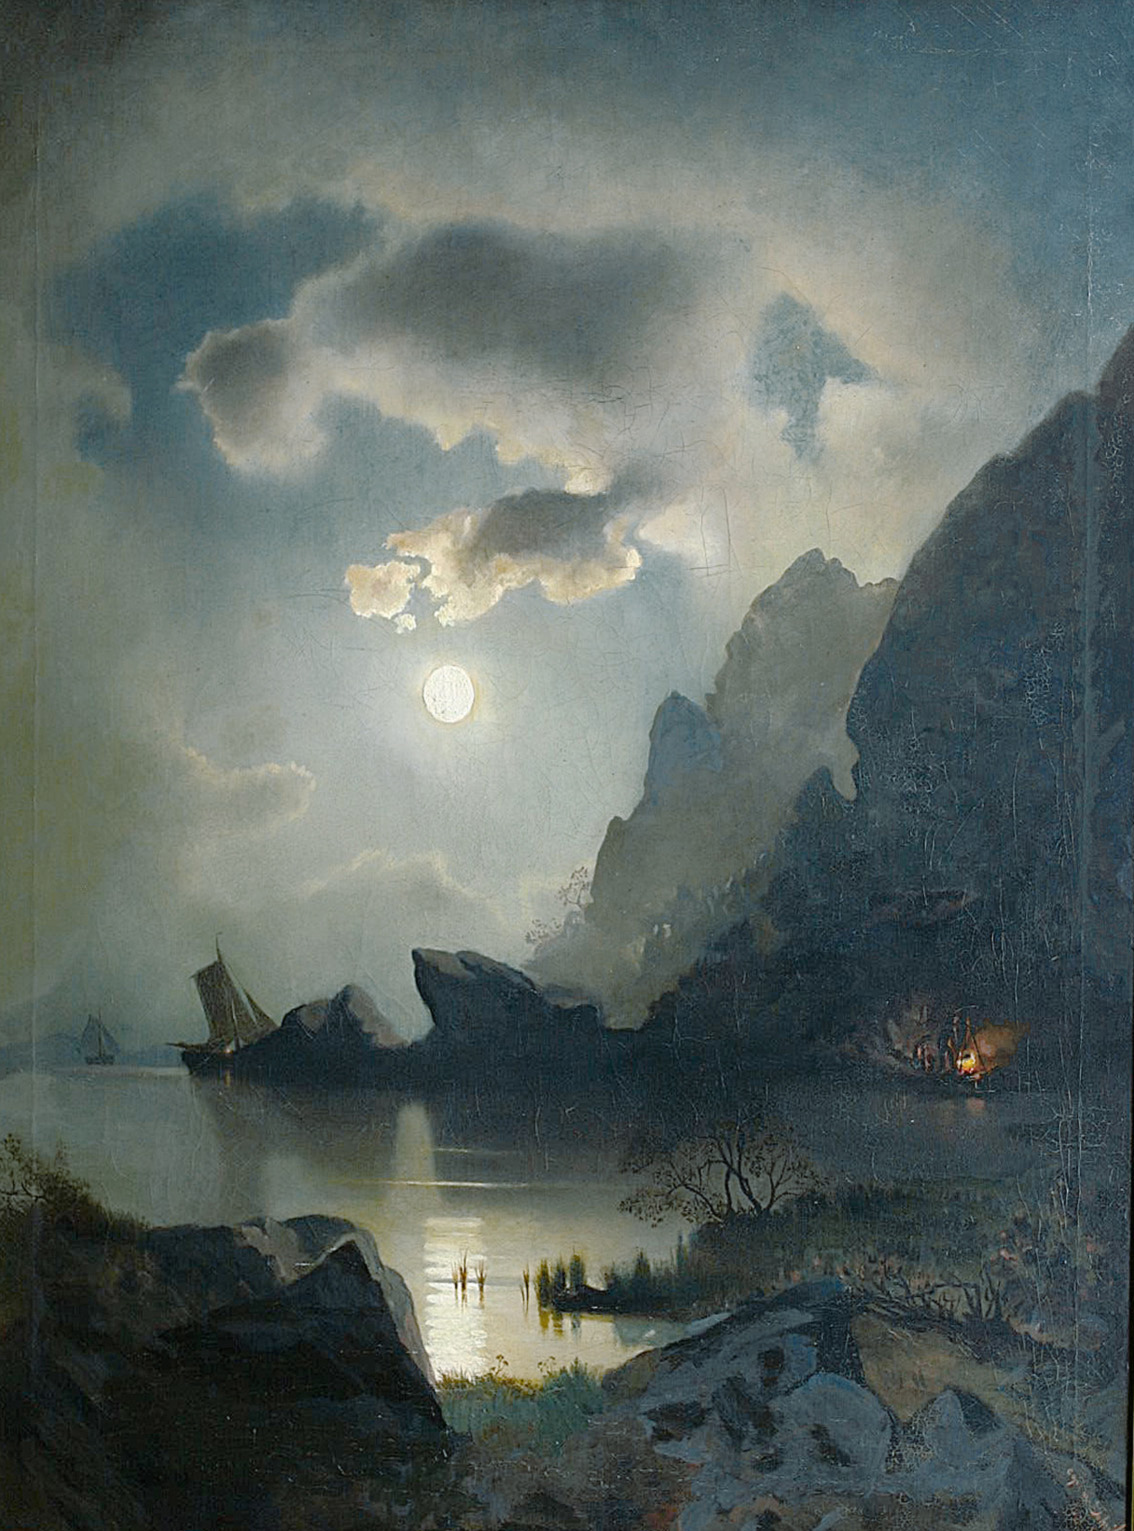 A moonlit Norwegian landscape